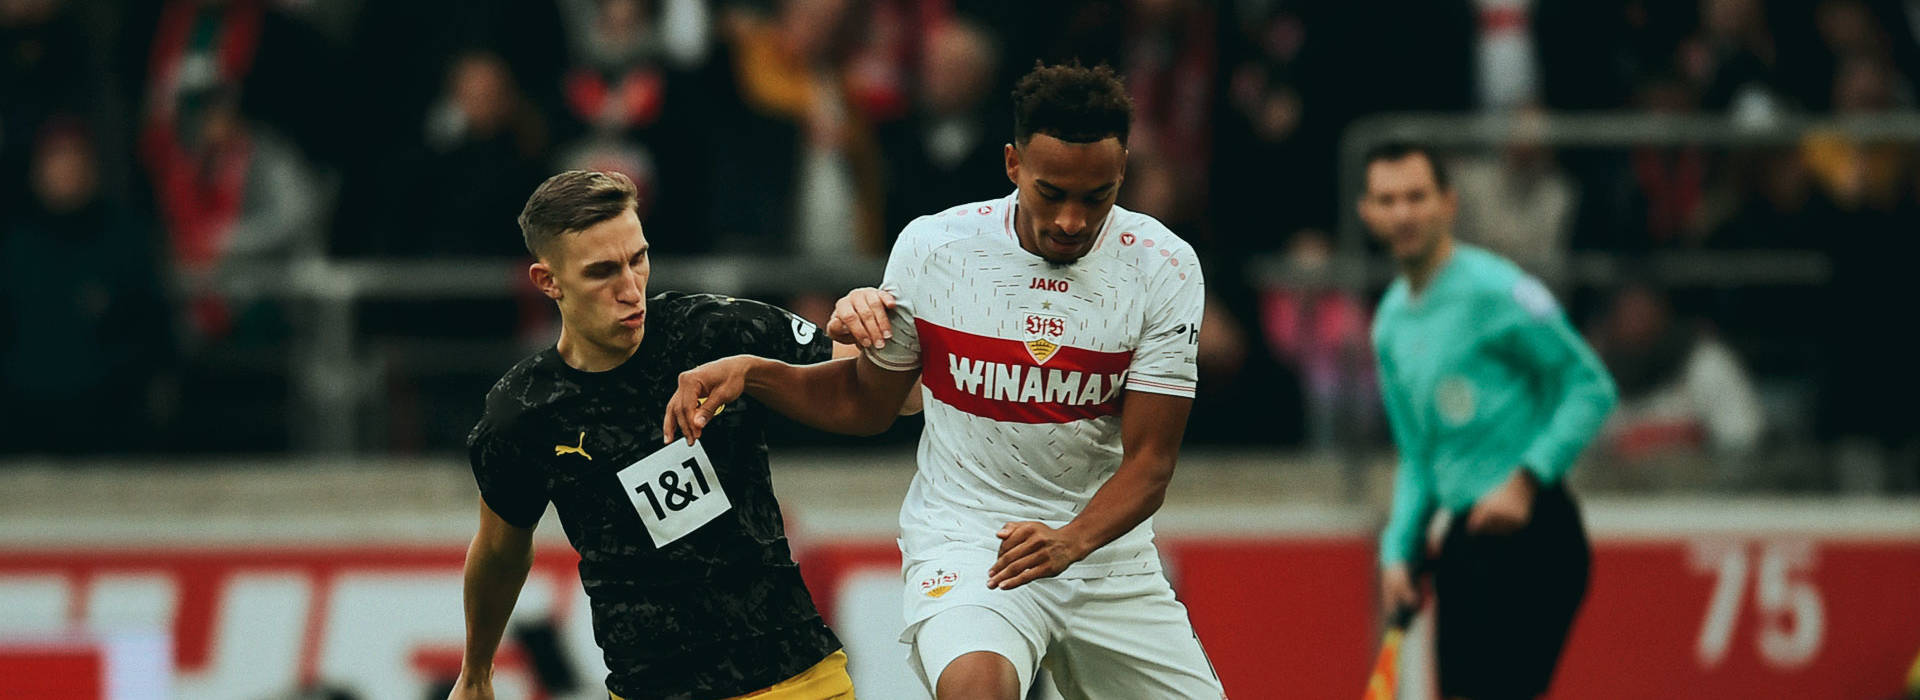 Zum sechsten Mal VfB gegen BVB im DFB-Pokal